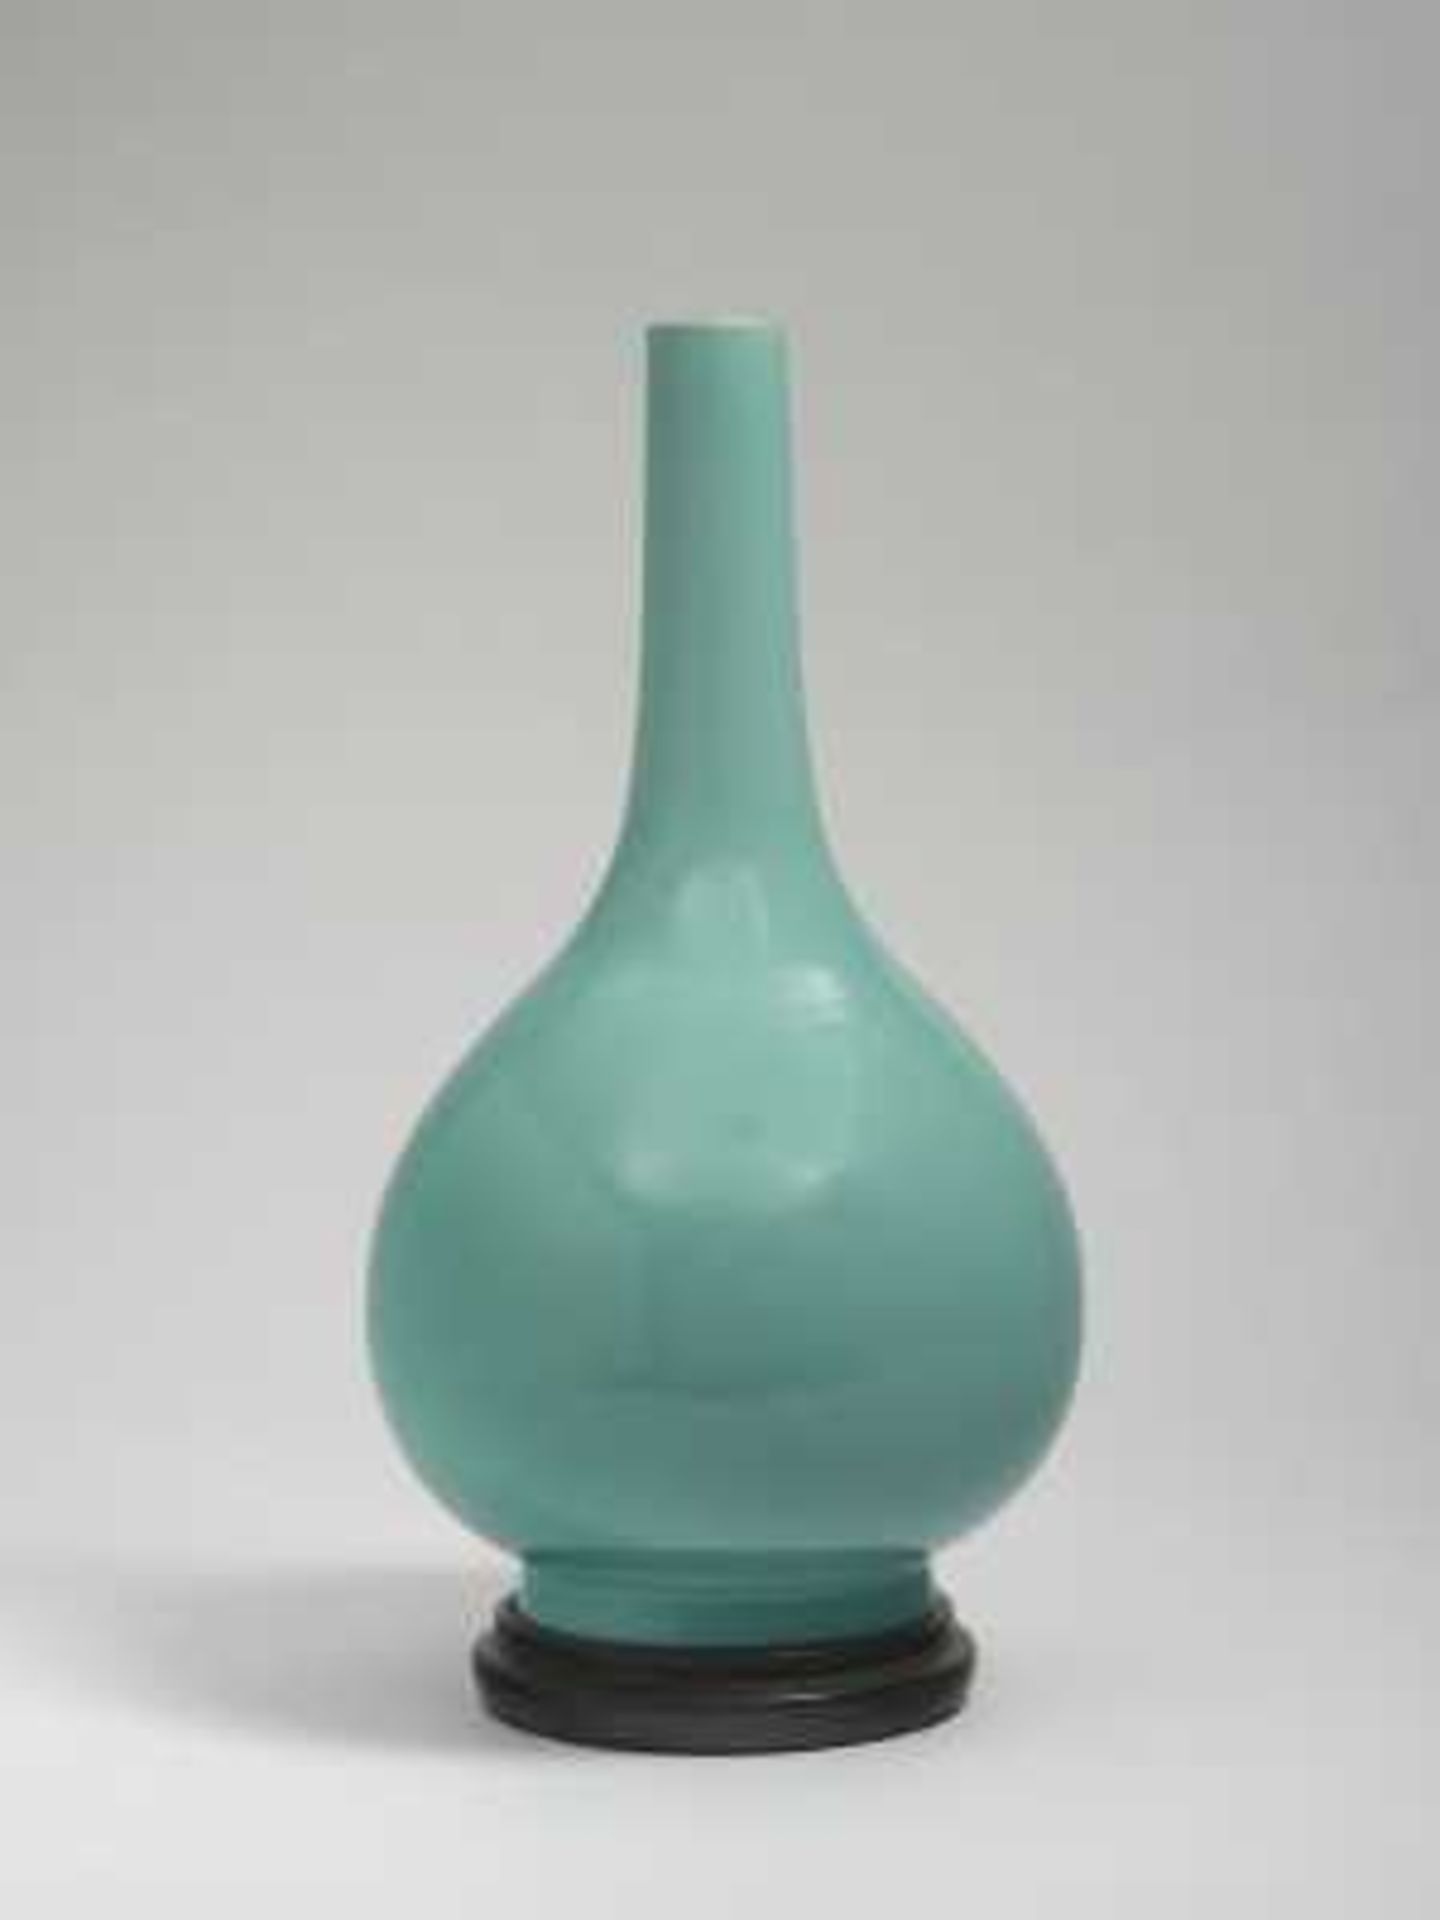 Vase China, 18./19. Jh. Porzellan. Balusterform, türkisgrün glasiert. H. 34,5 cm. Holzsockel.